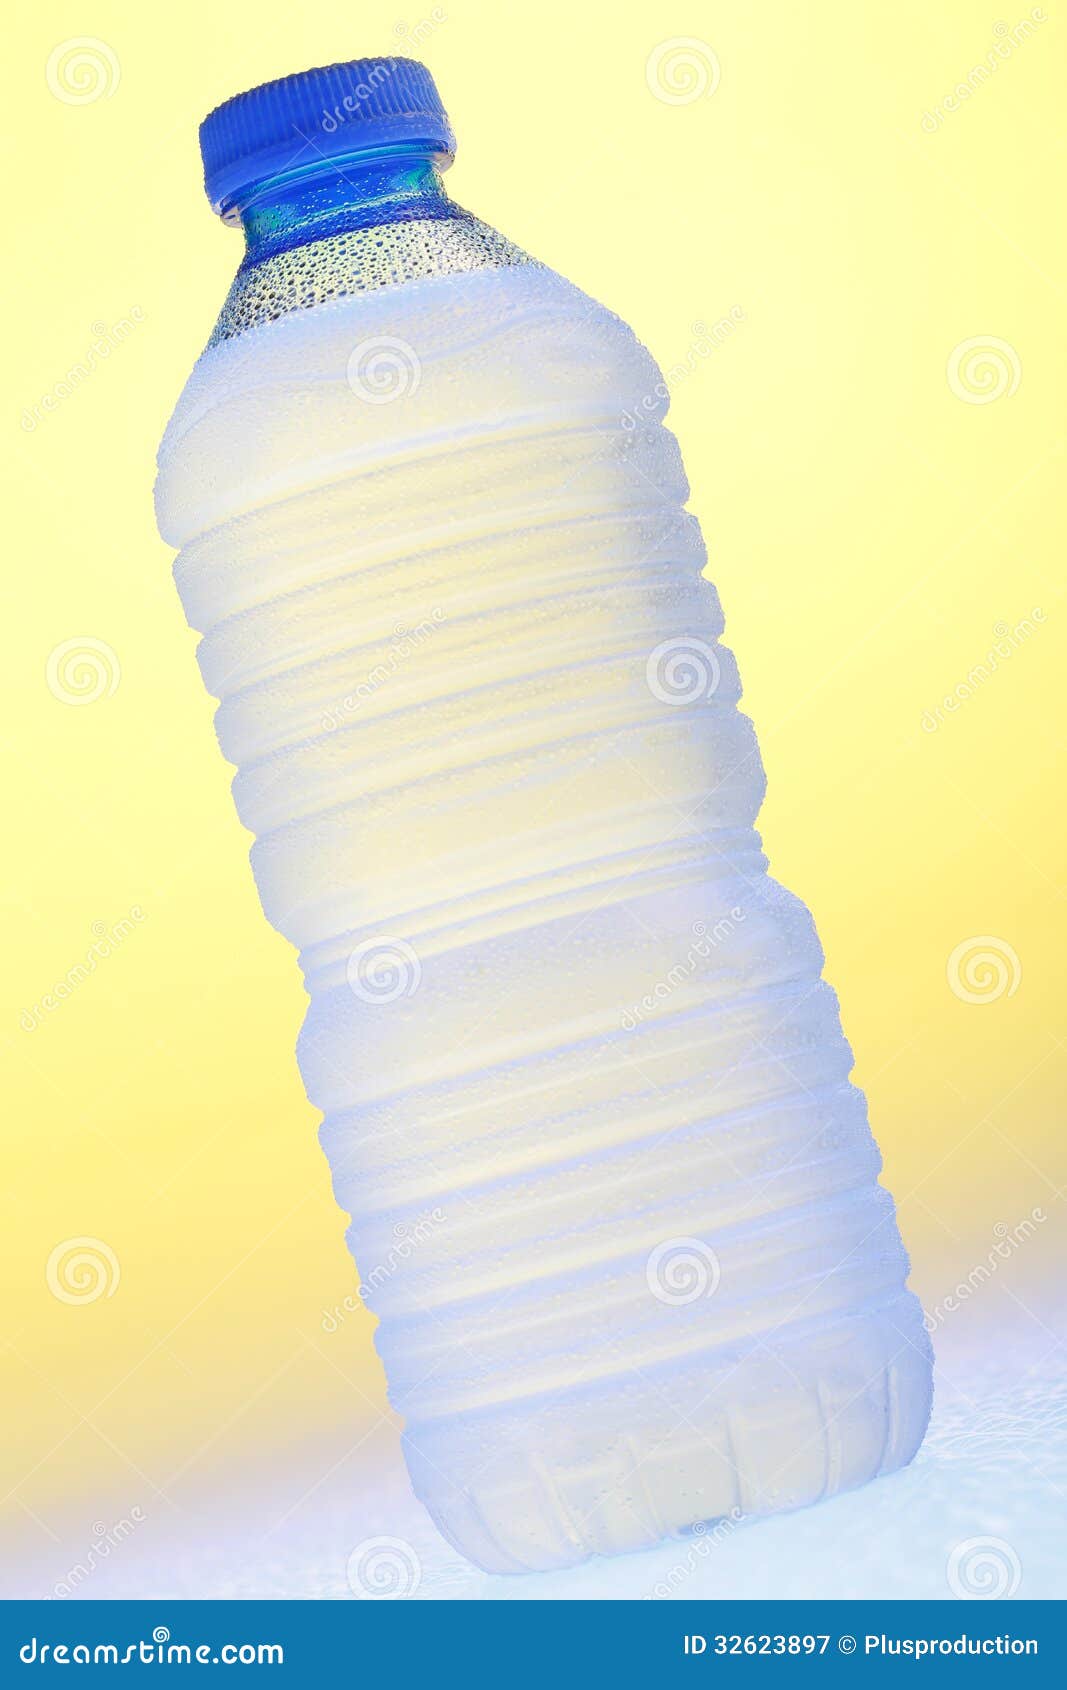 https://thumbs.dreamstime.com/z/fresh-water-bottle-wet-icy-cold-plastic-32623897.jpg